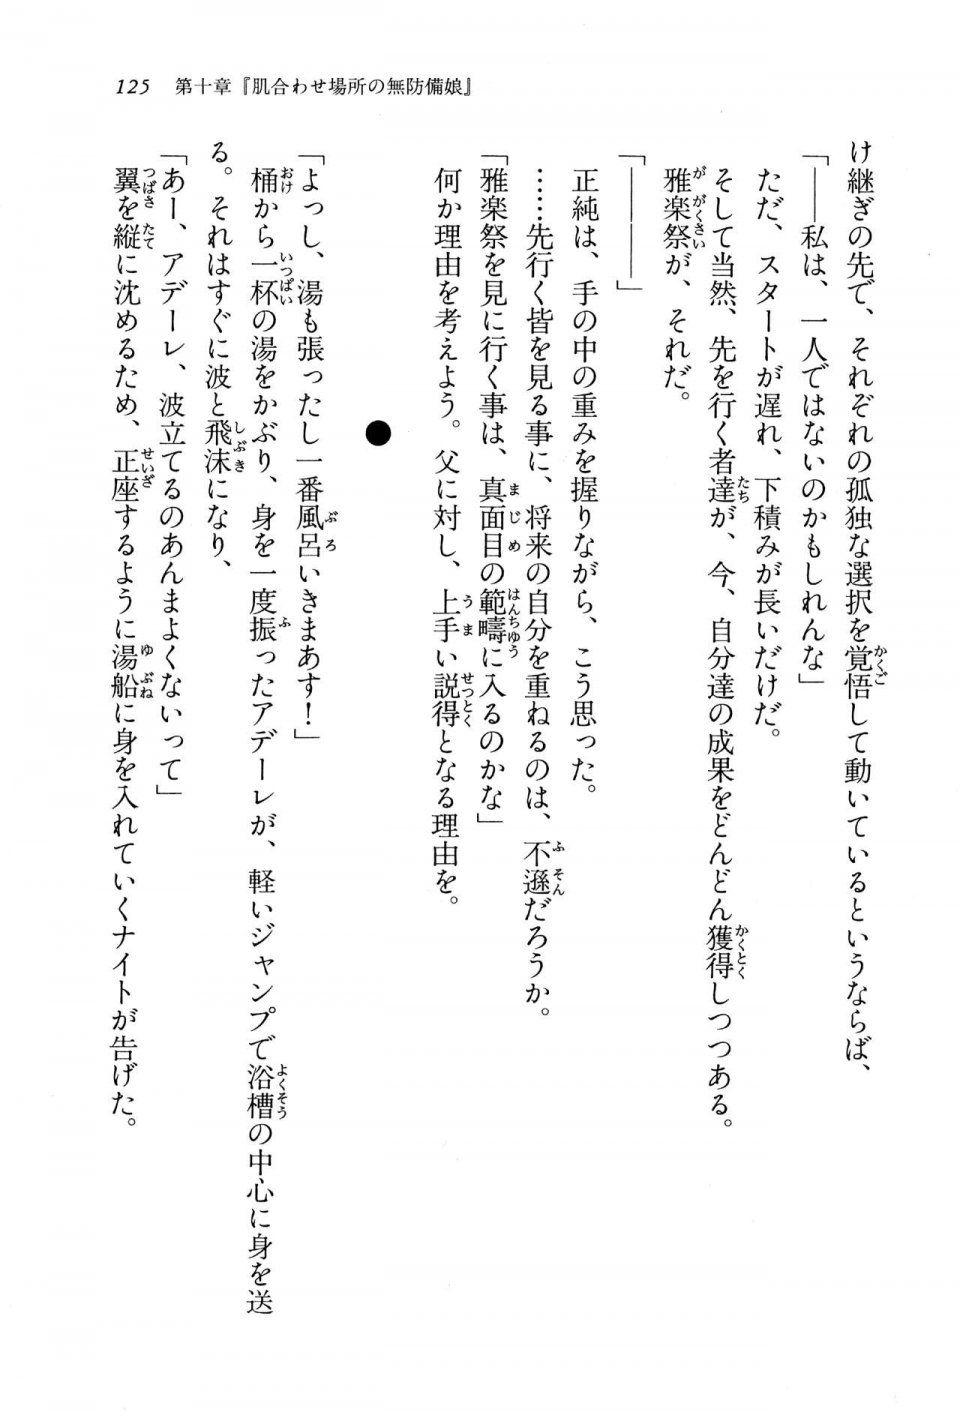 Kyoukai Senjou no Horizon BD Special Mininovel Vol 8(4B) - Photo #129